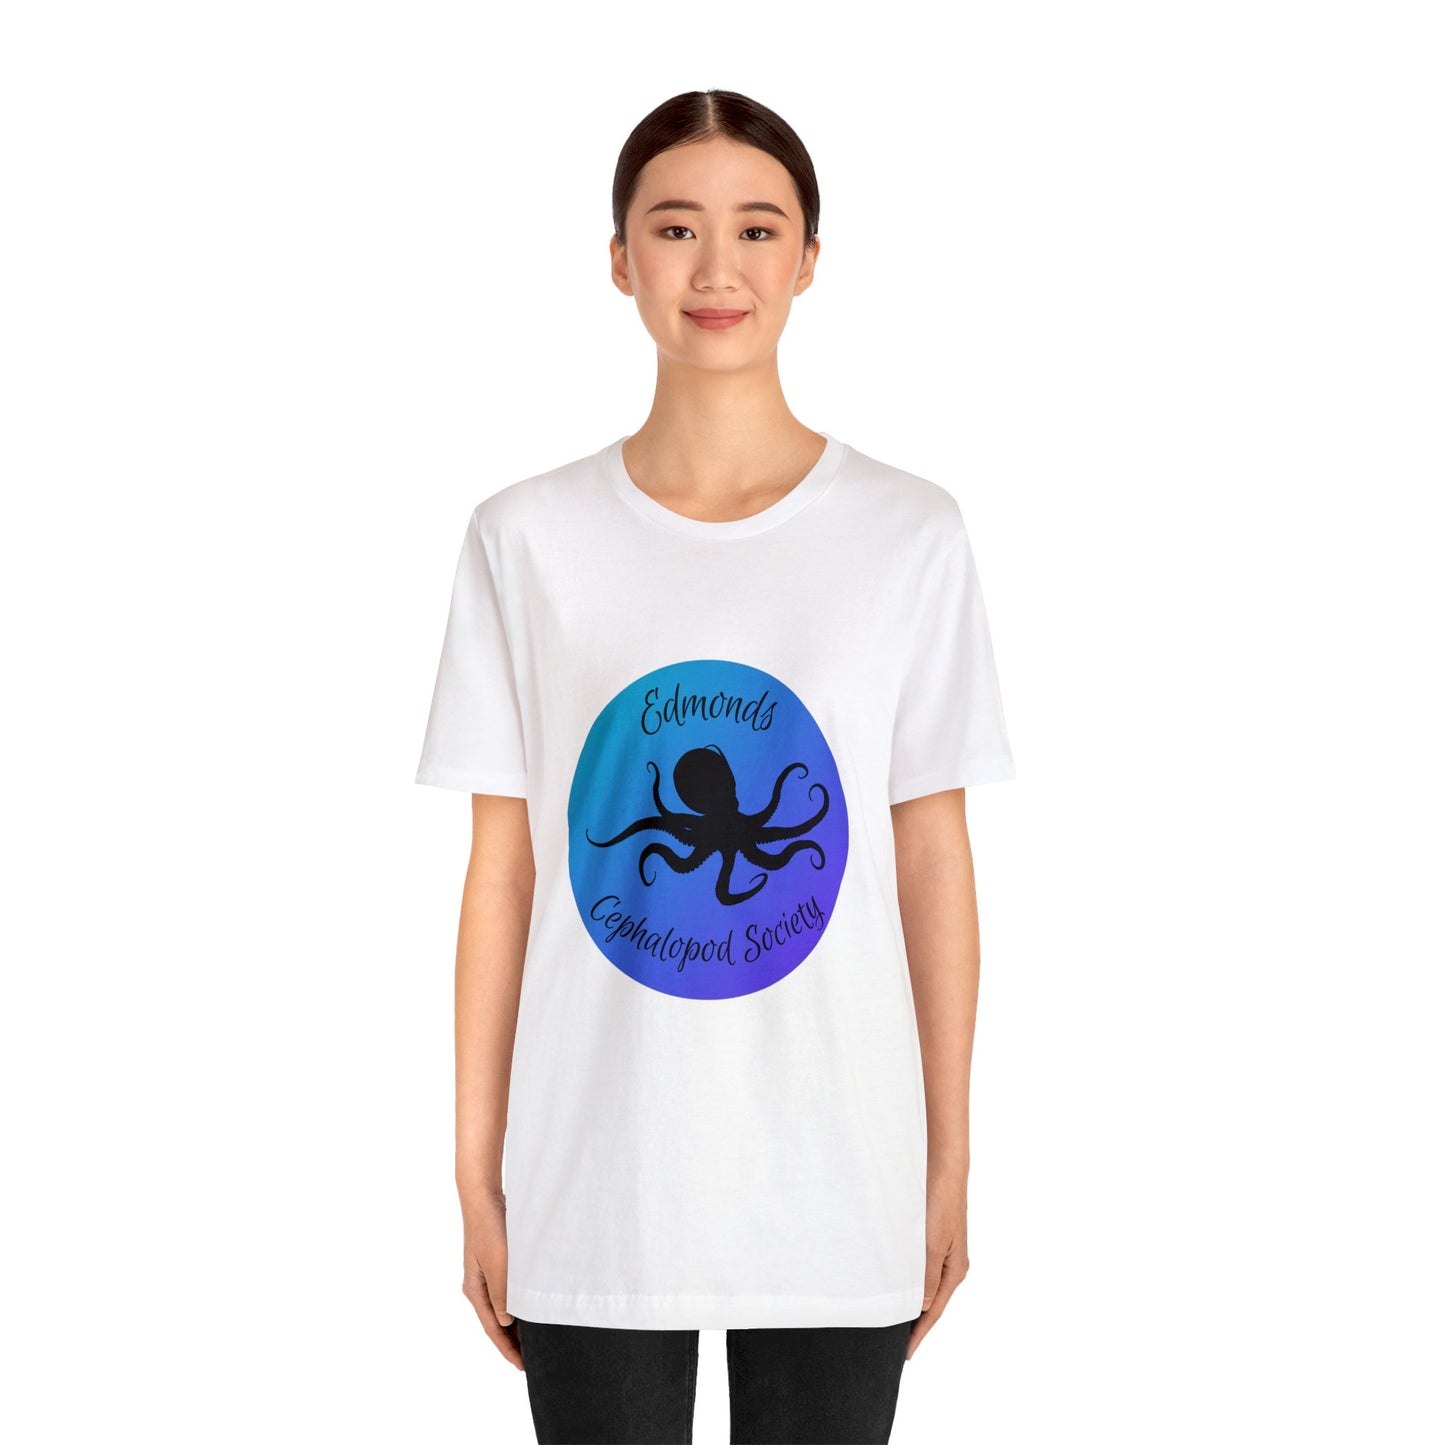 Edmonds Cephalopod Society T-shirt